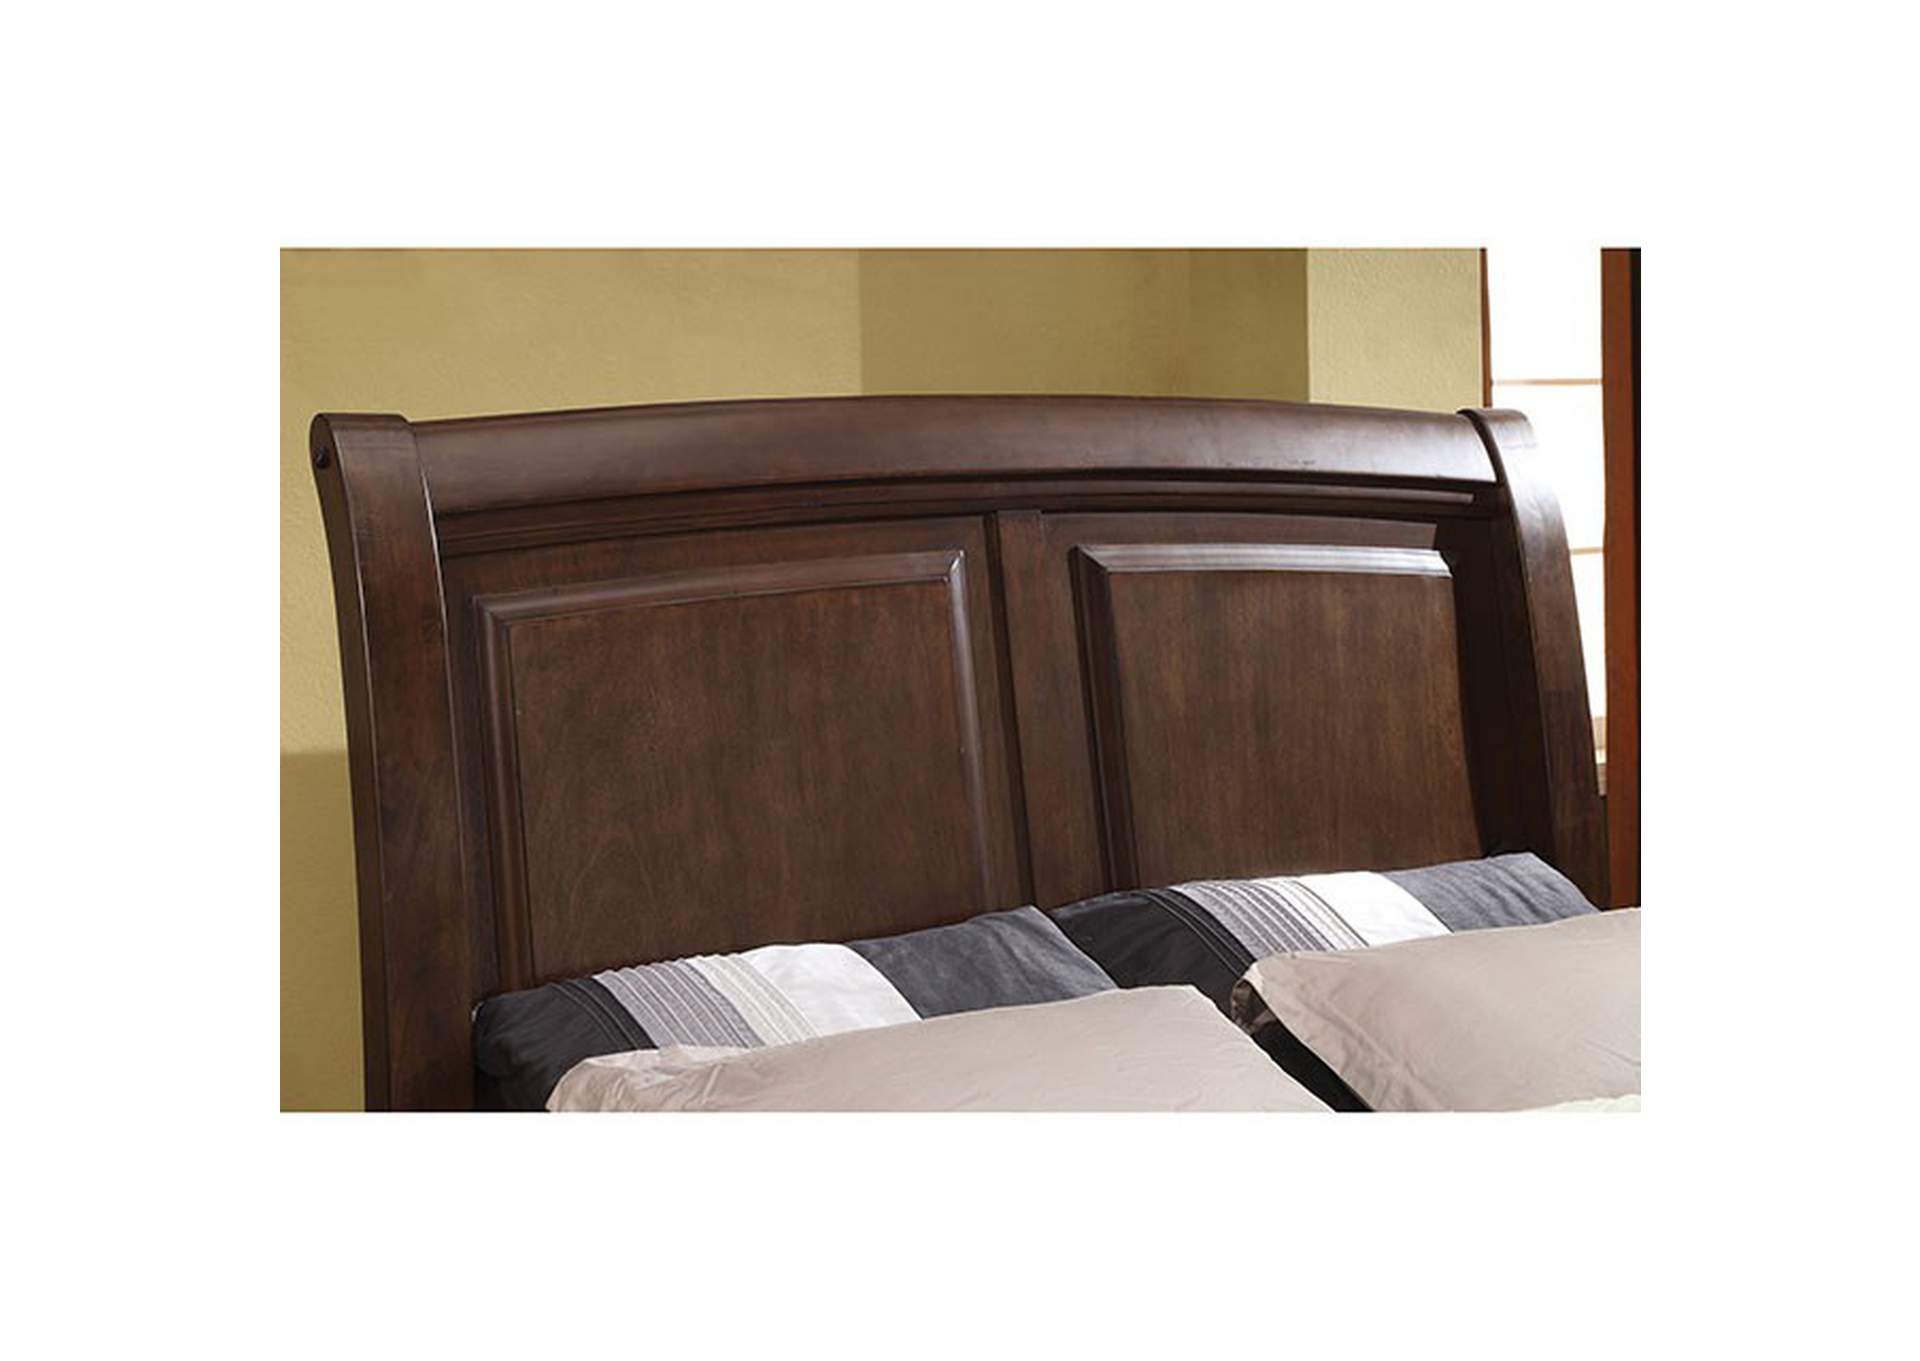 Litchville Queen Bed,Furniture of America